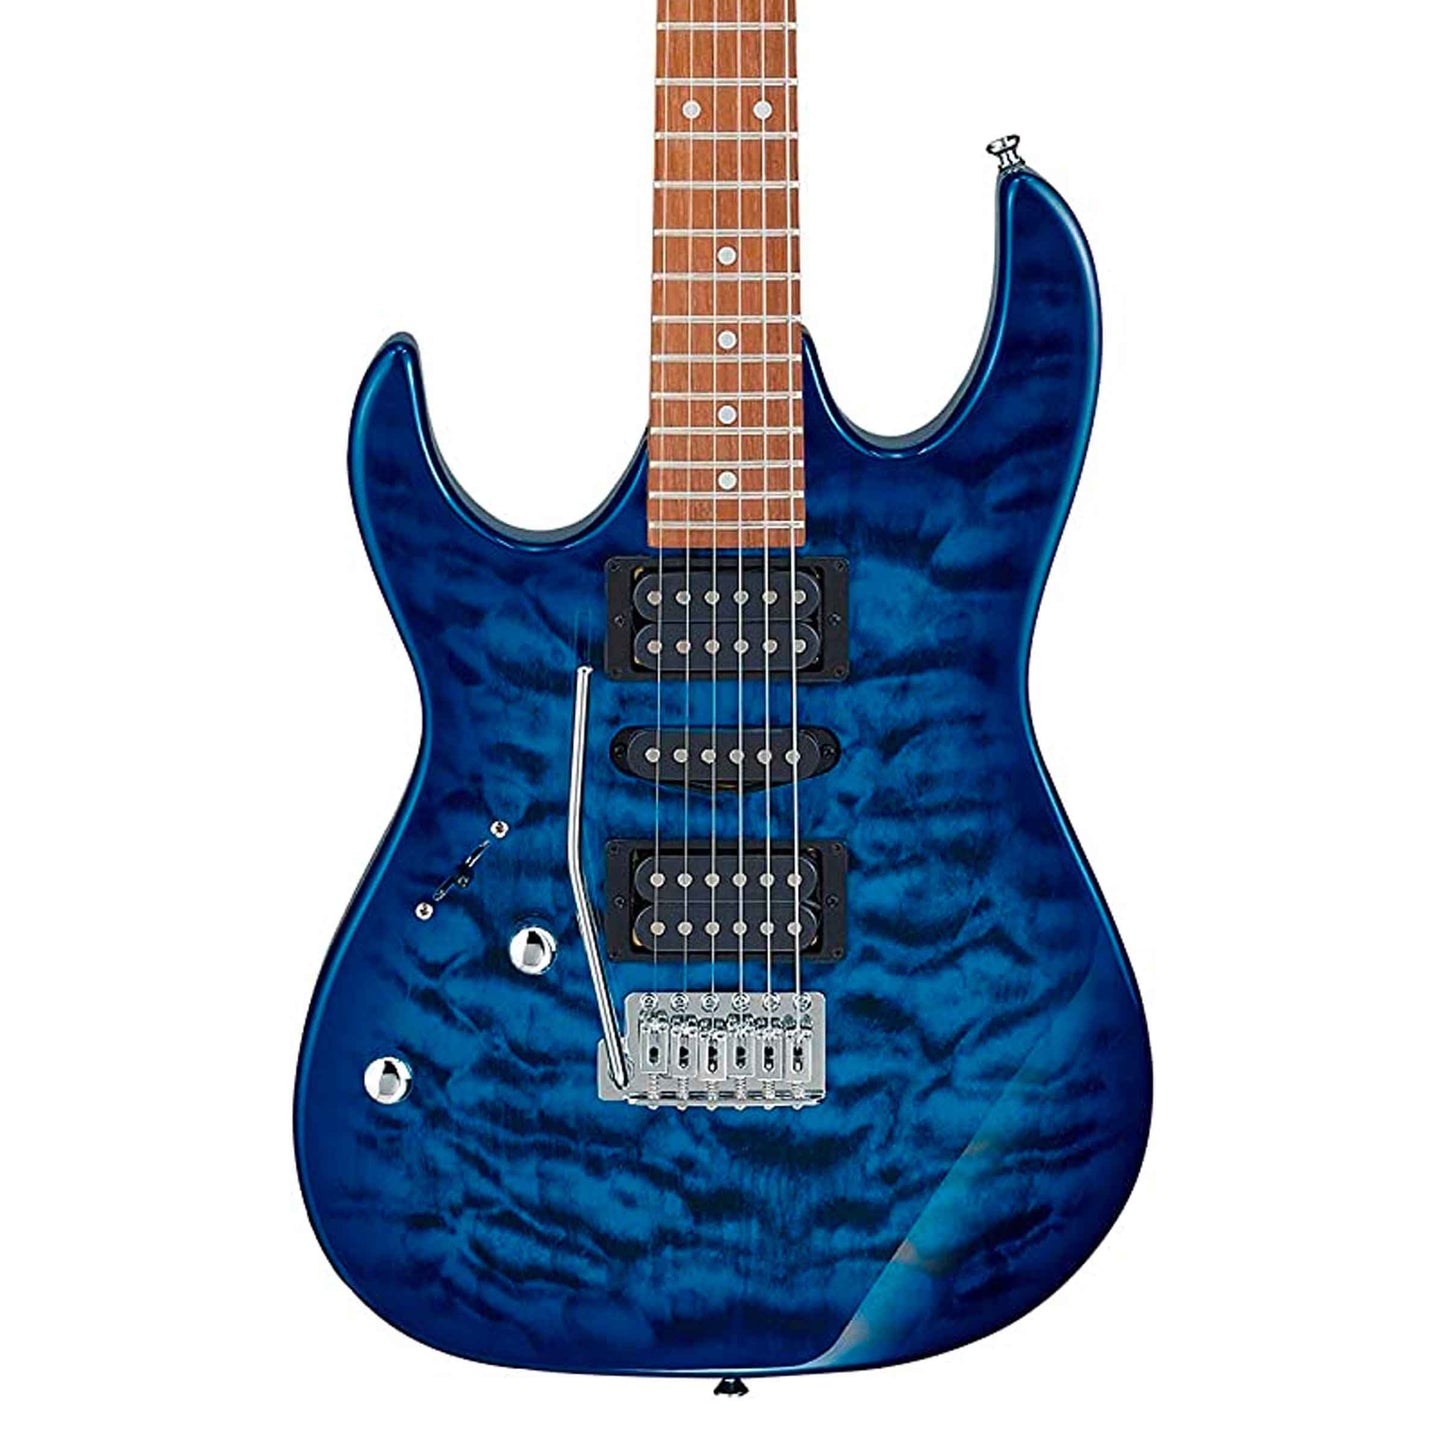 Ibanez Gio GRX70QAL left-handed electric guitar - Transparent Blue Burst